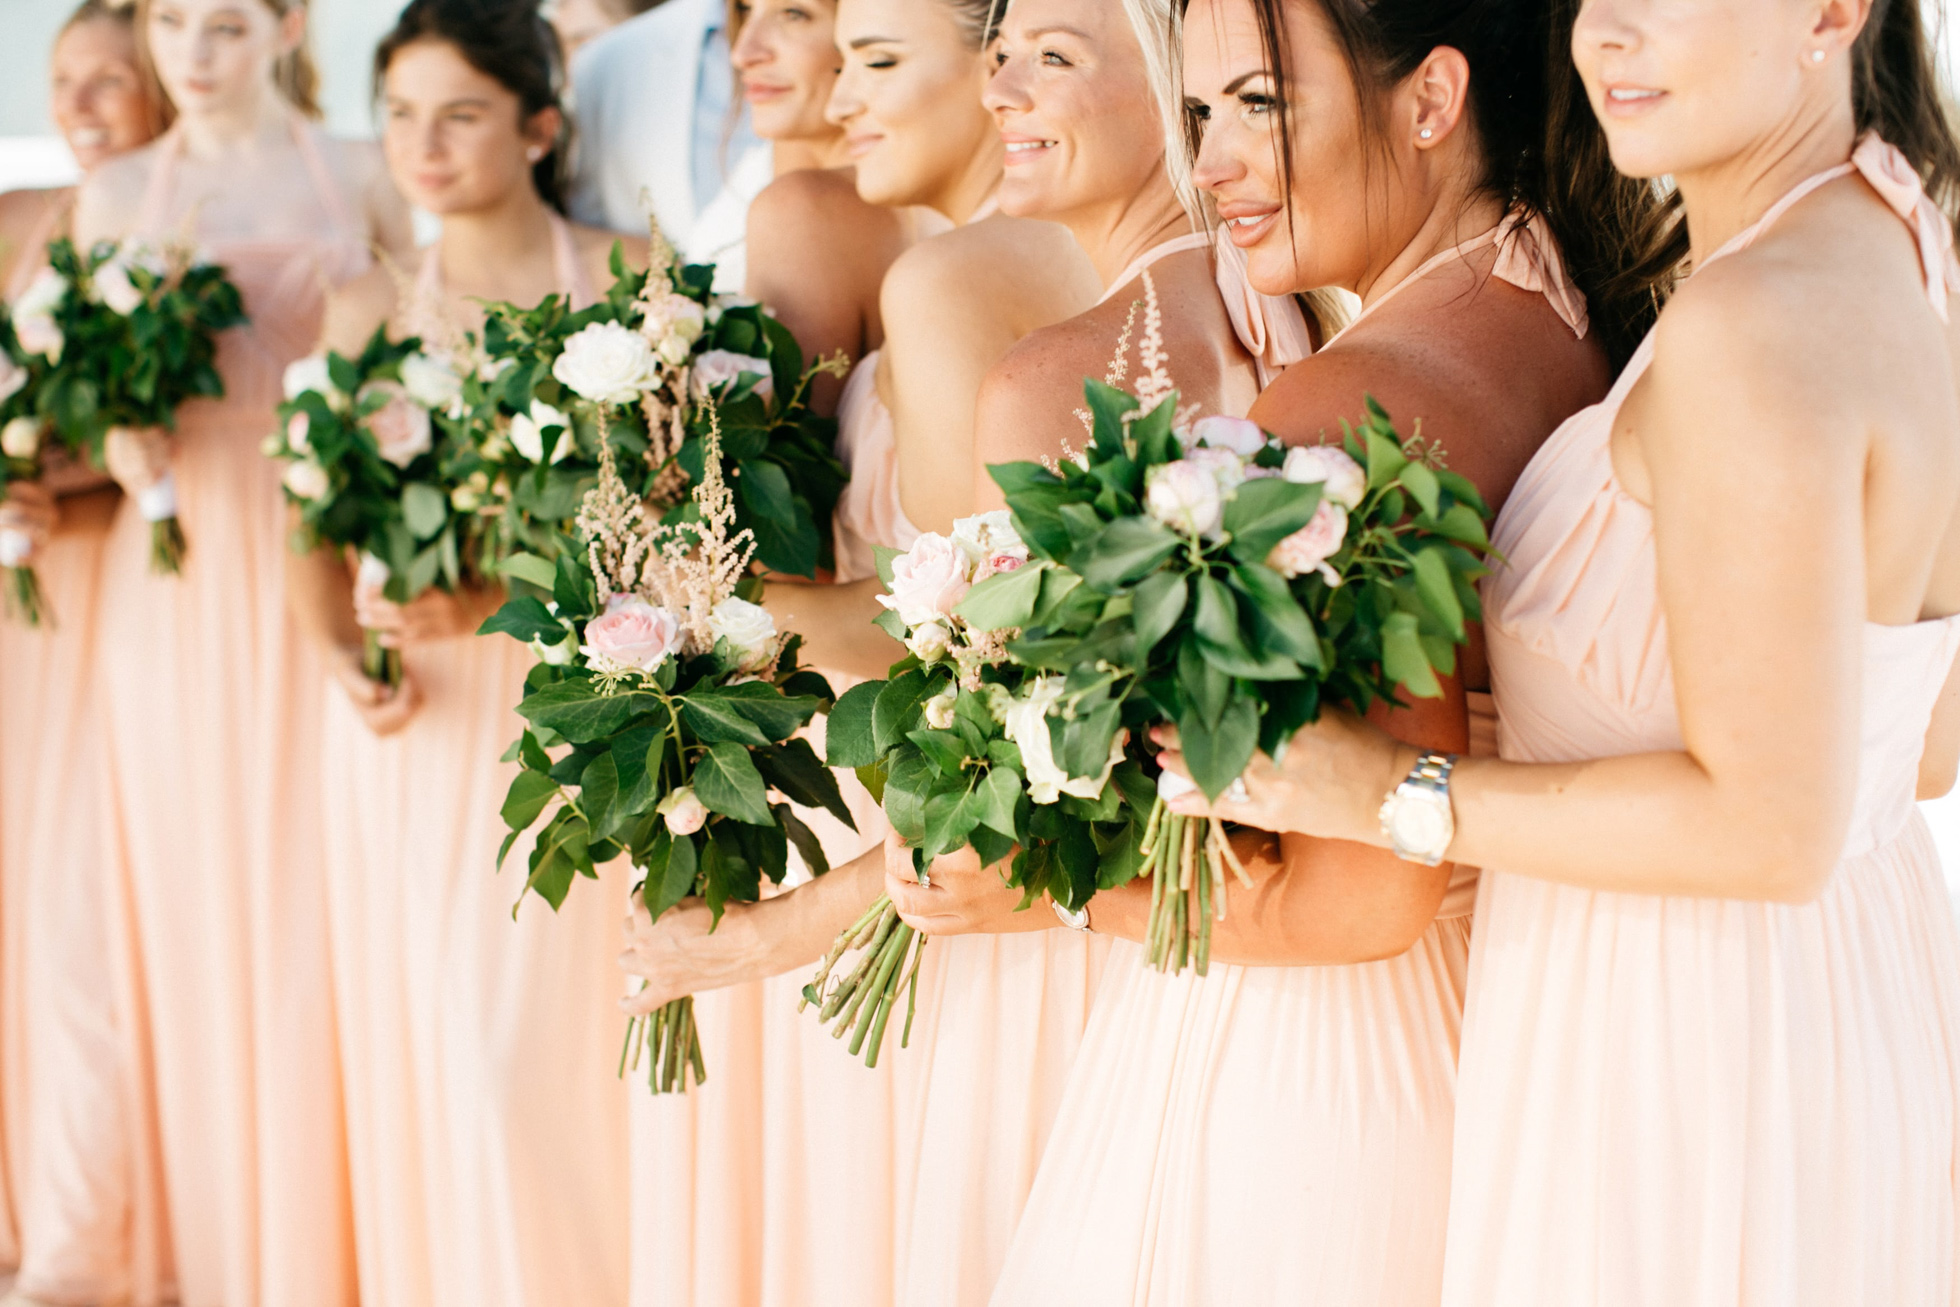 Bridal party holding flower bouquets at Le Ciel wedding estate in Santorini island, Greece.